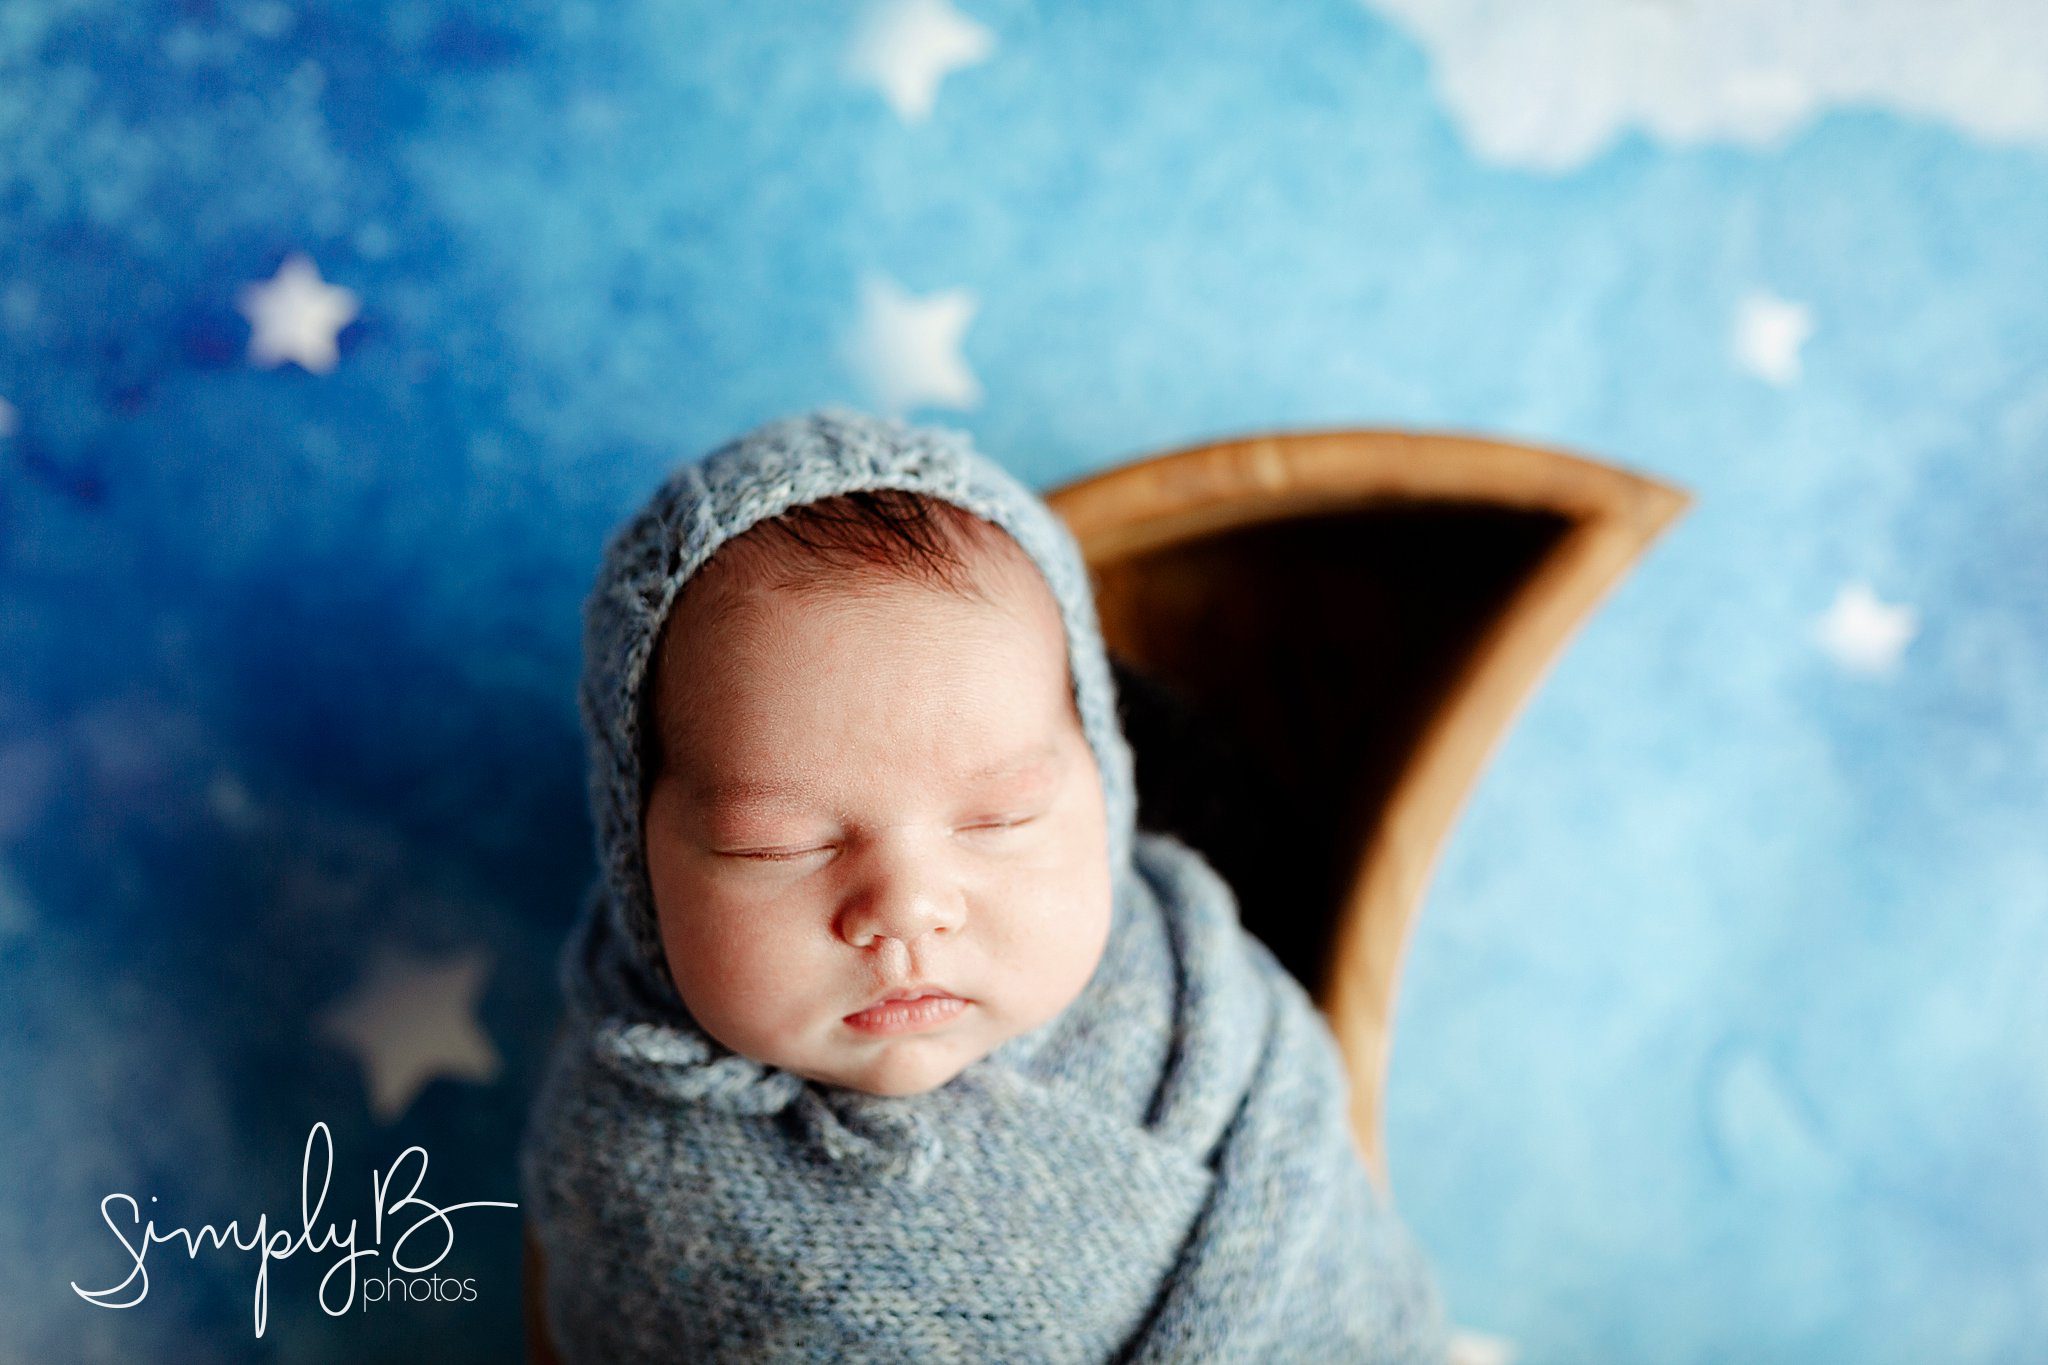 edmonton newborn photography studio